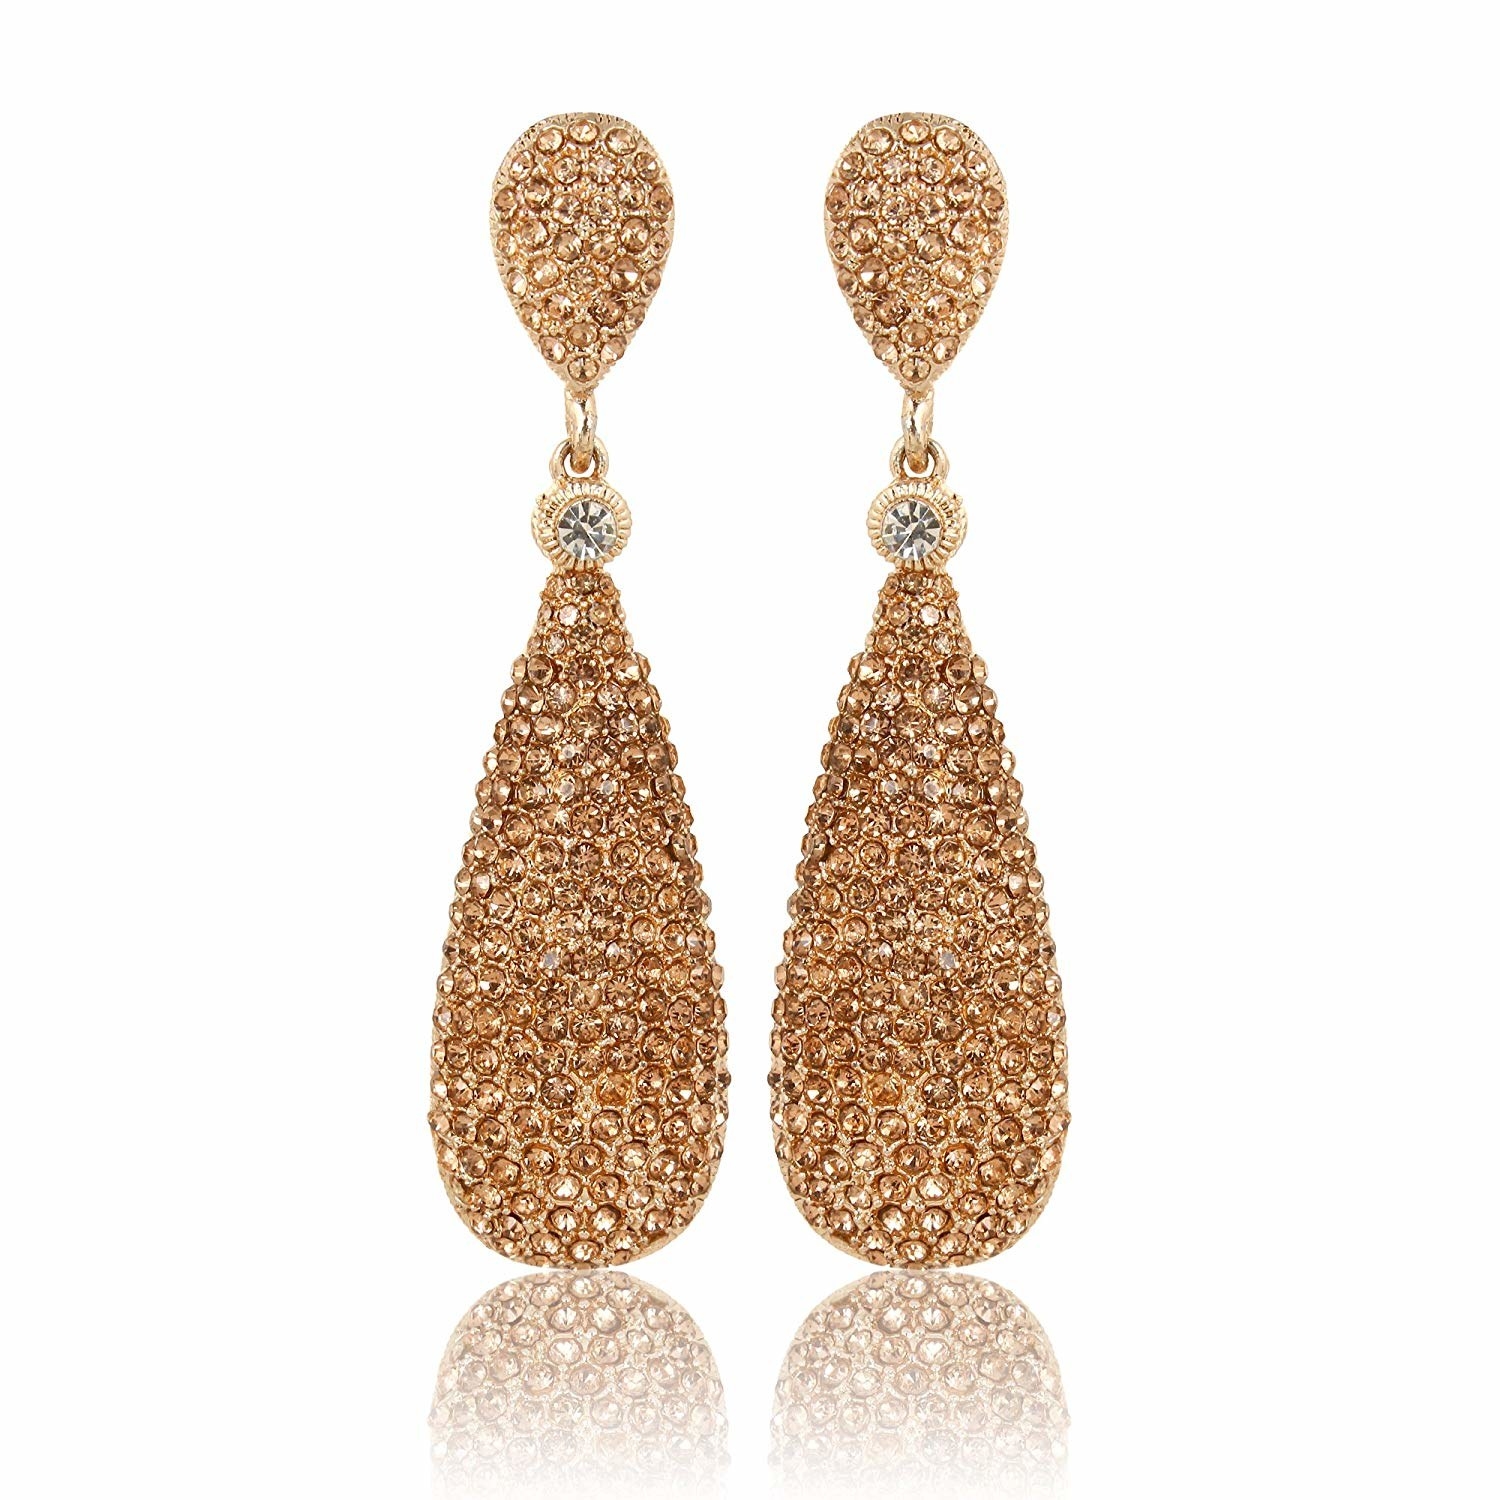 A pair of glittery golden drop earrings 